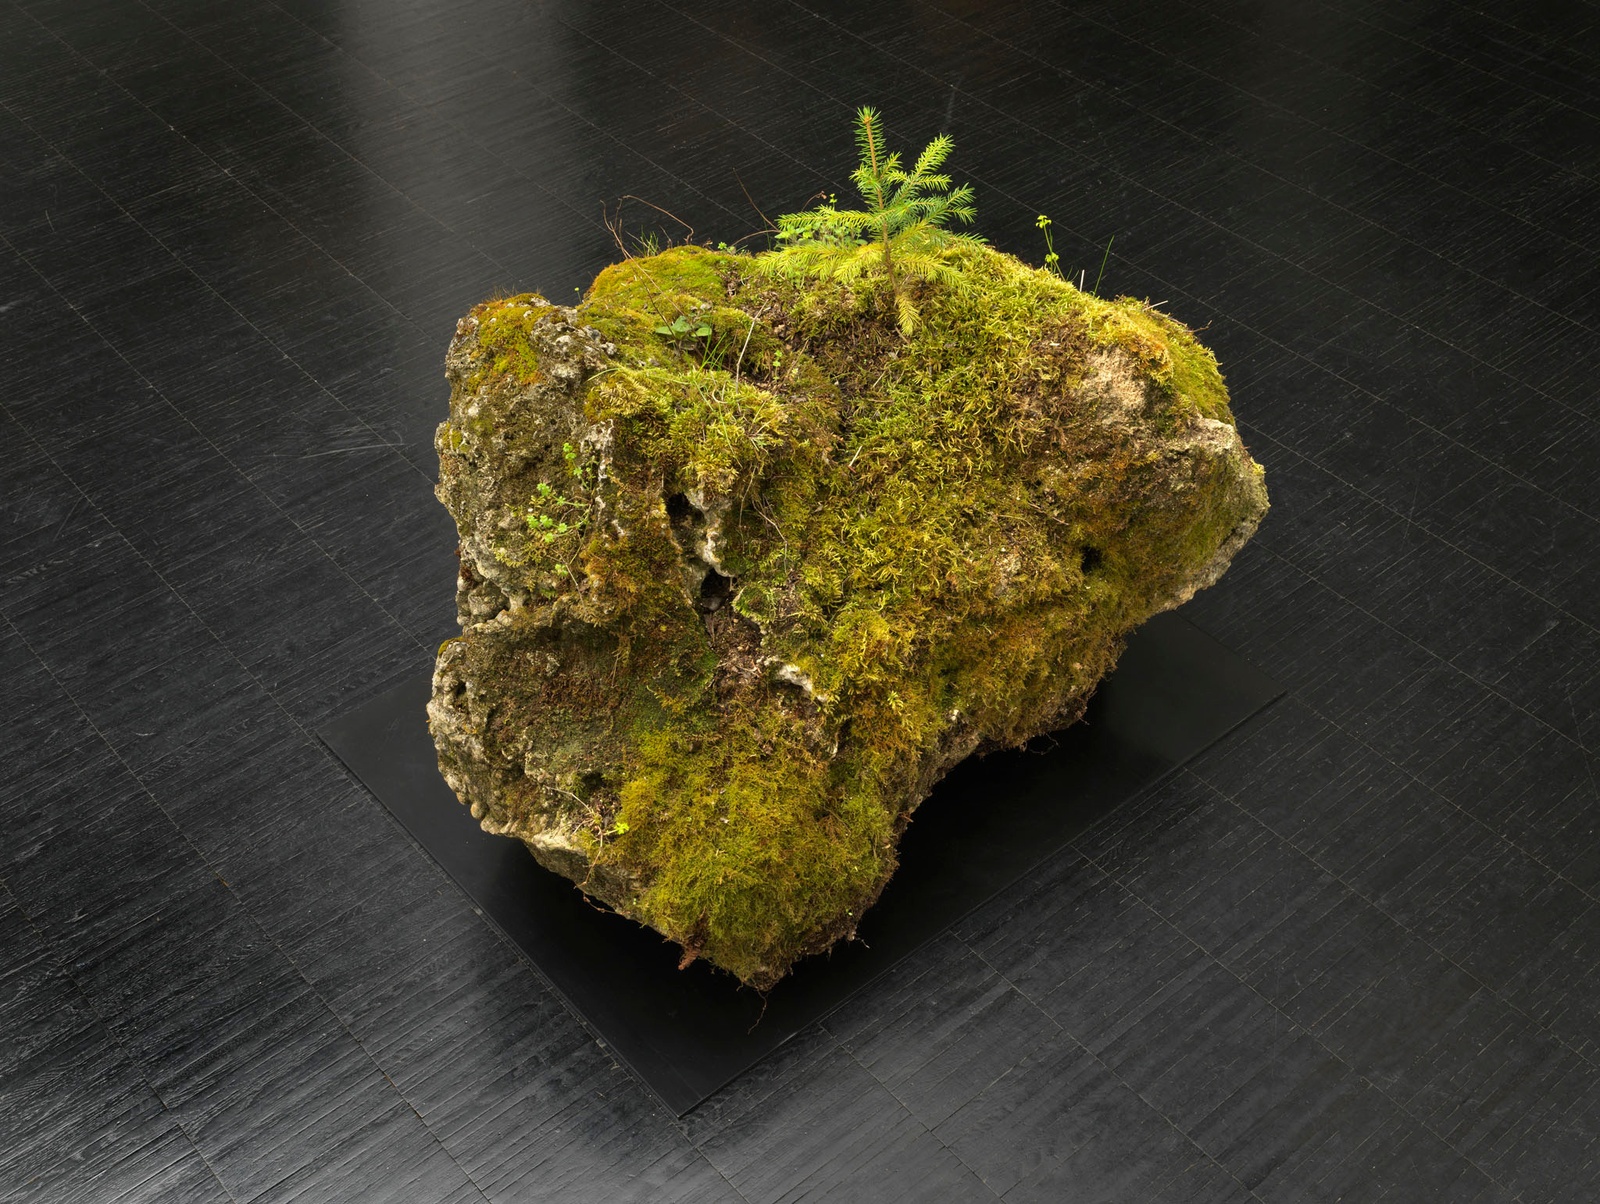 Andrea Büttner. Tuffstein, 2018. tuff stone, moss. dimensions variable